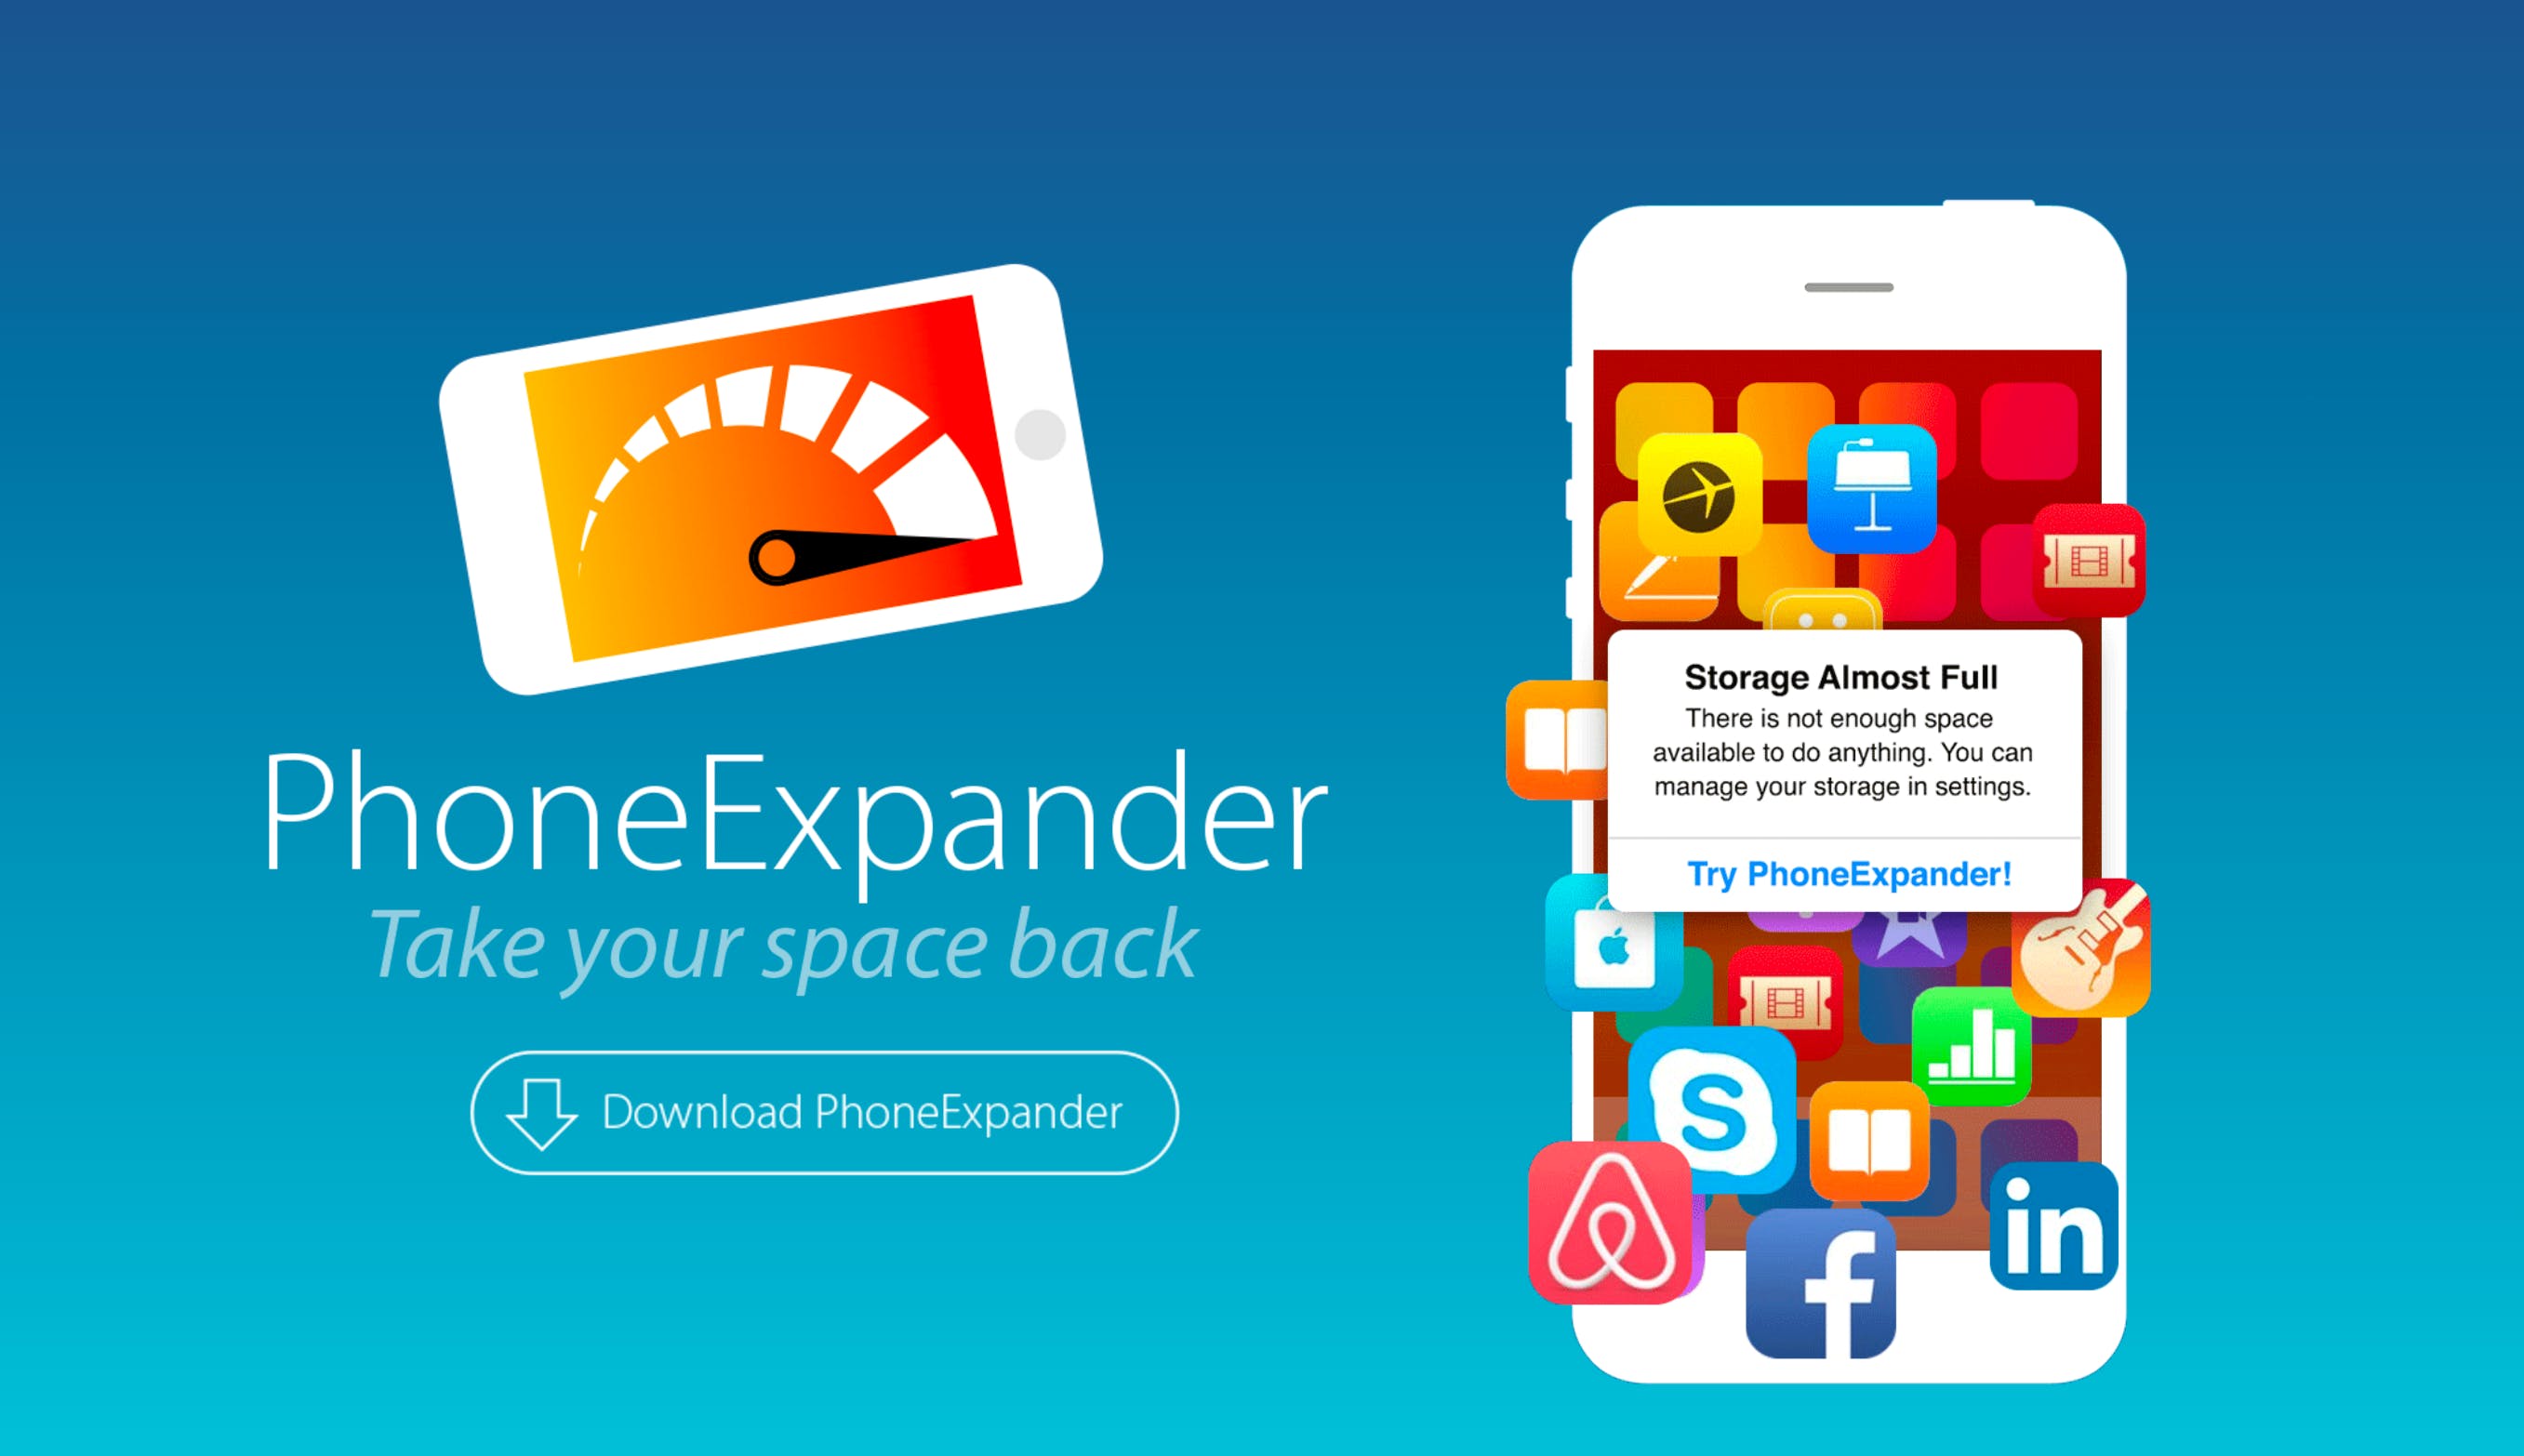 Phone Expander media 2